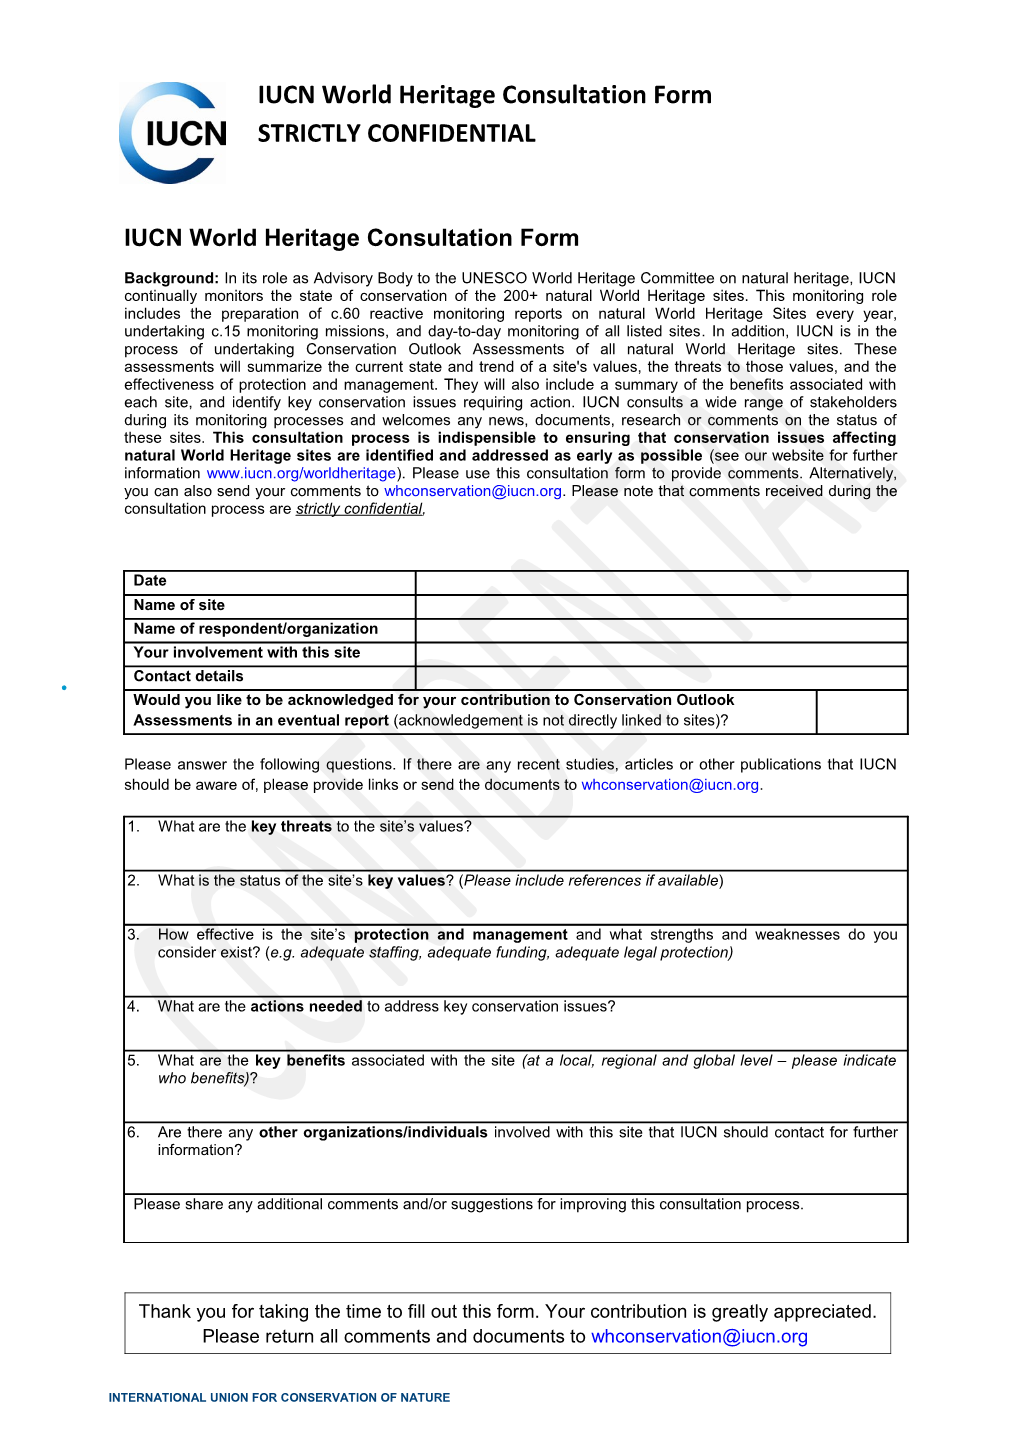 IUCN World Heritage Consultation Form